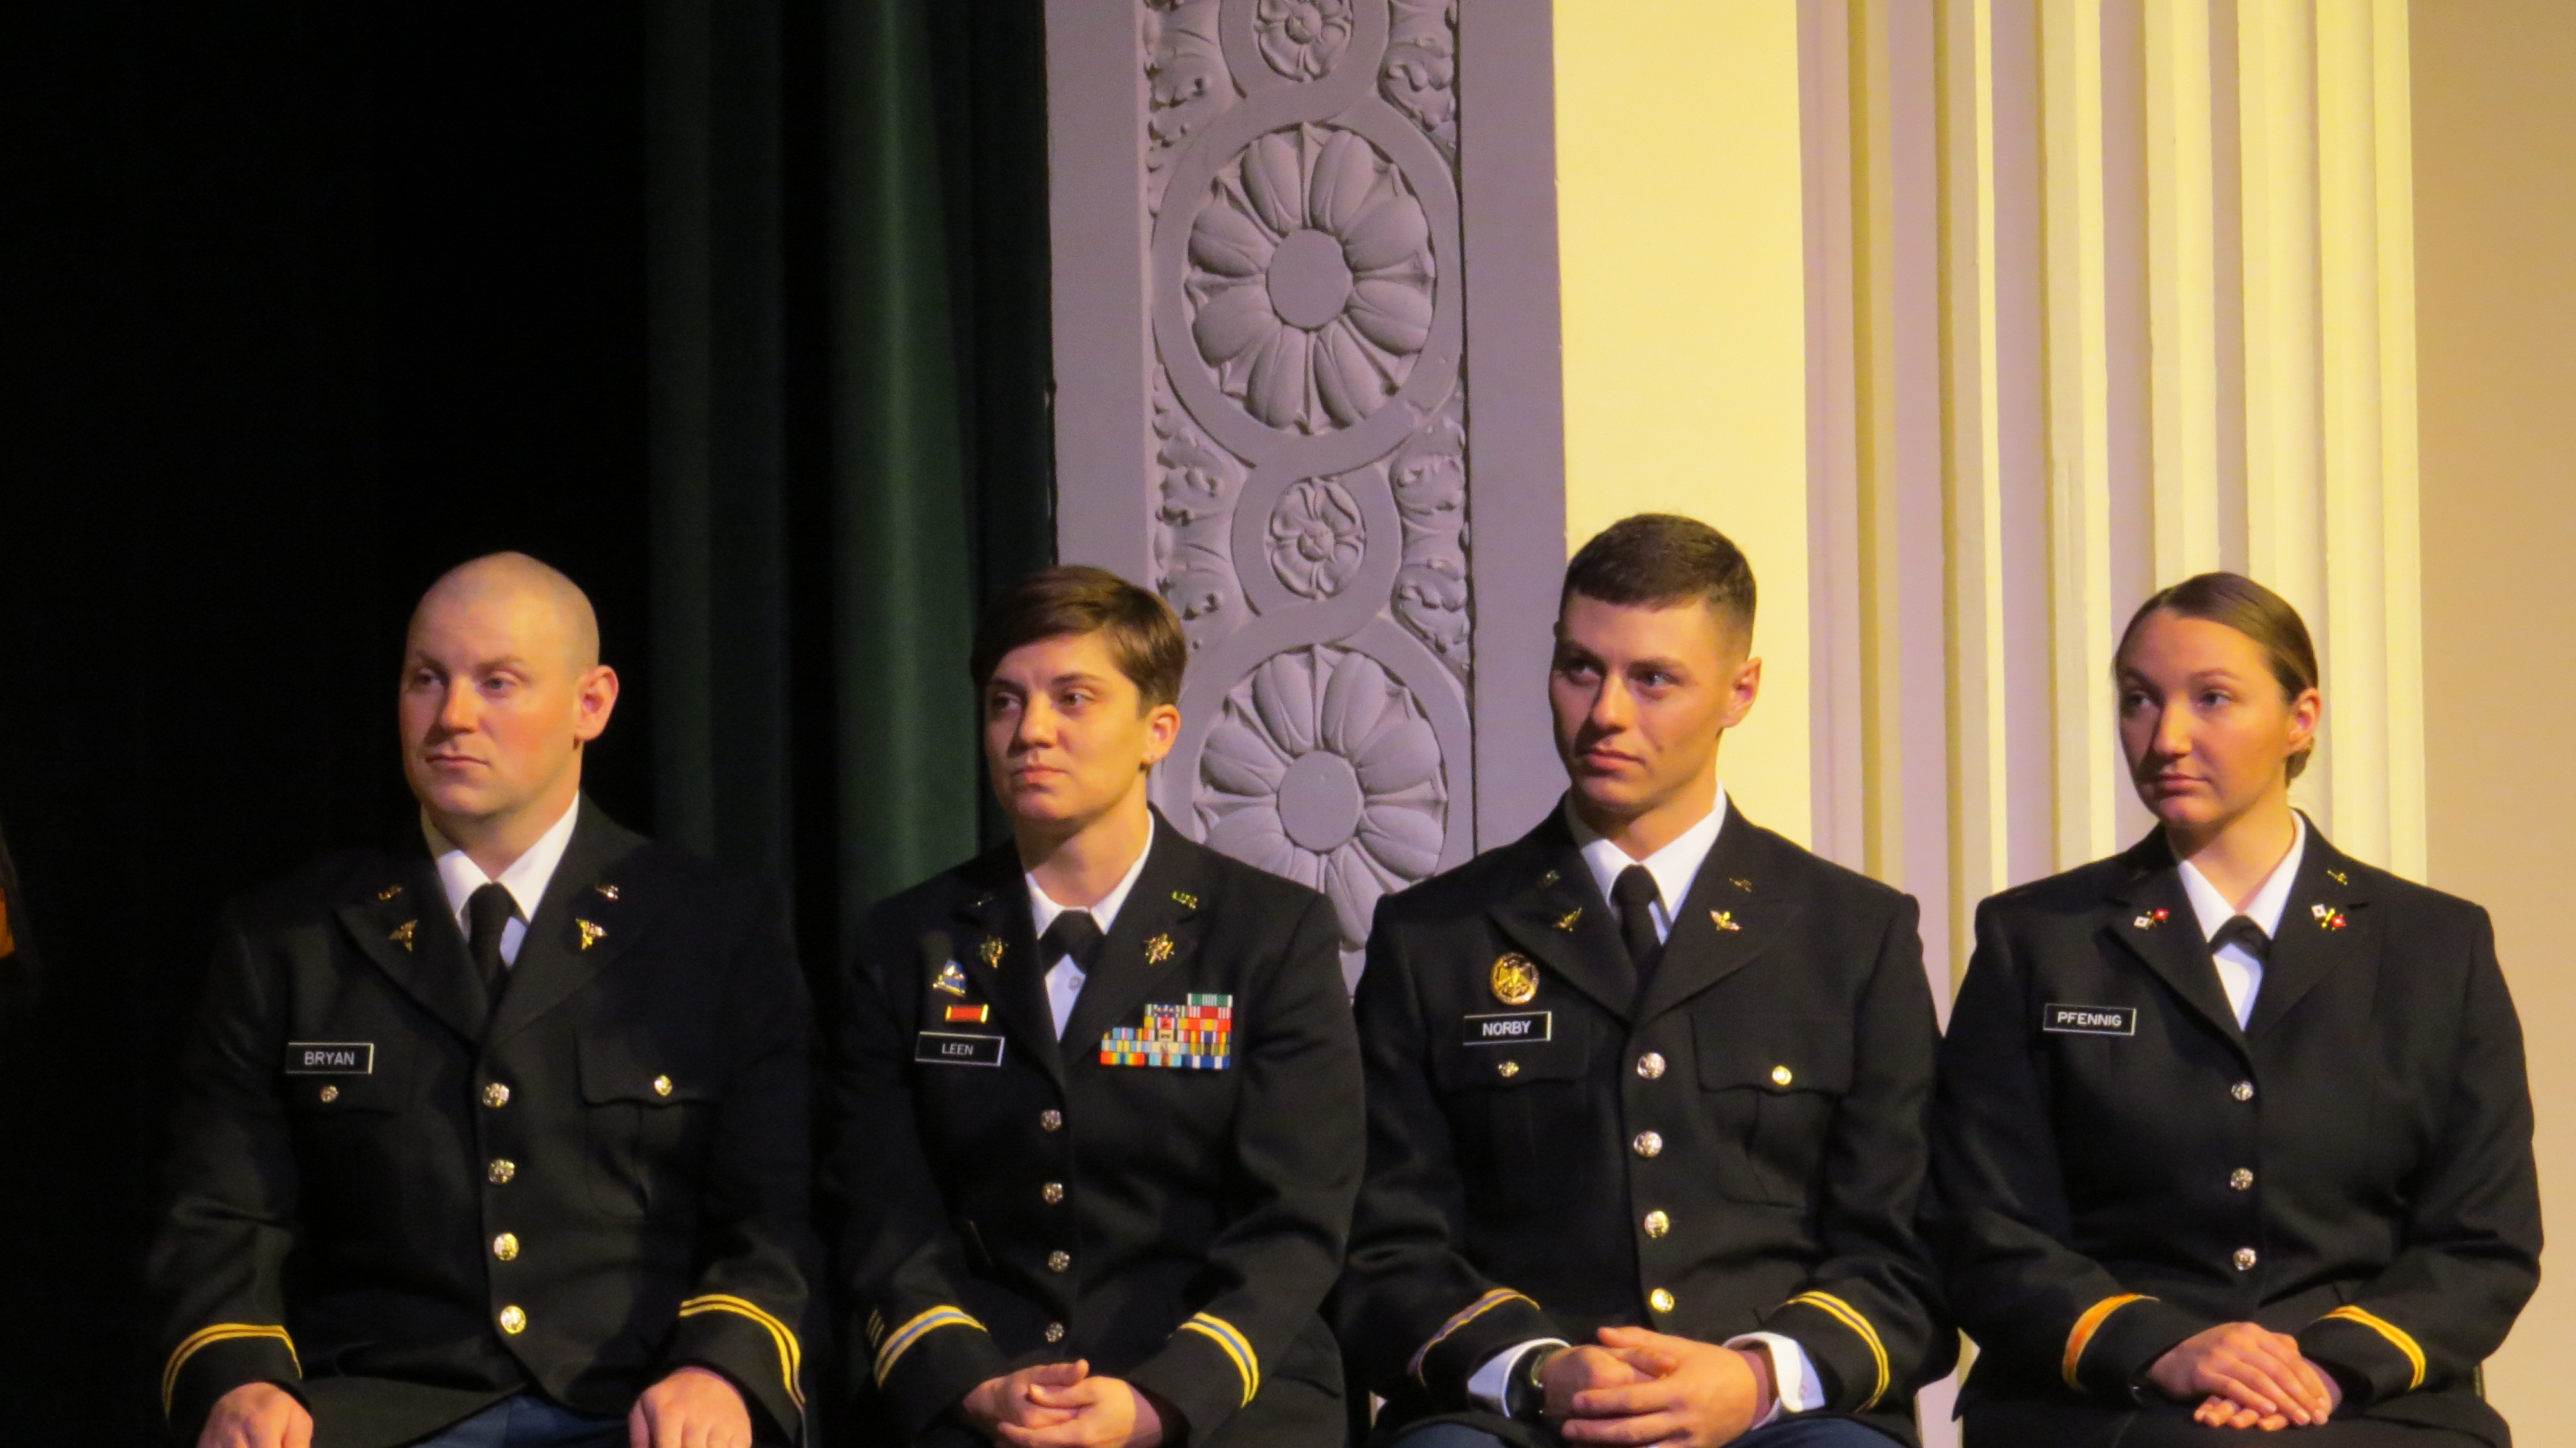 Fall 2019 EWU Army ROTC Commissioning Ceremony